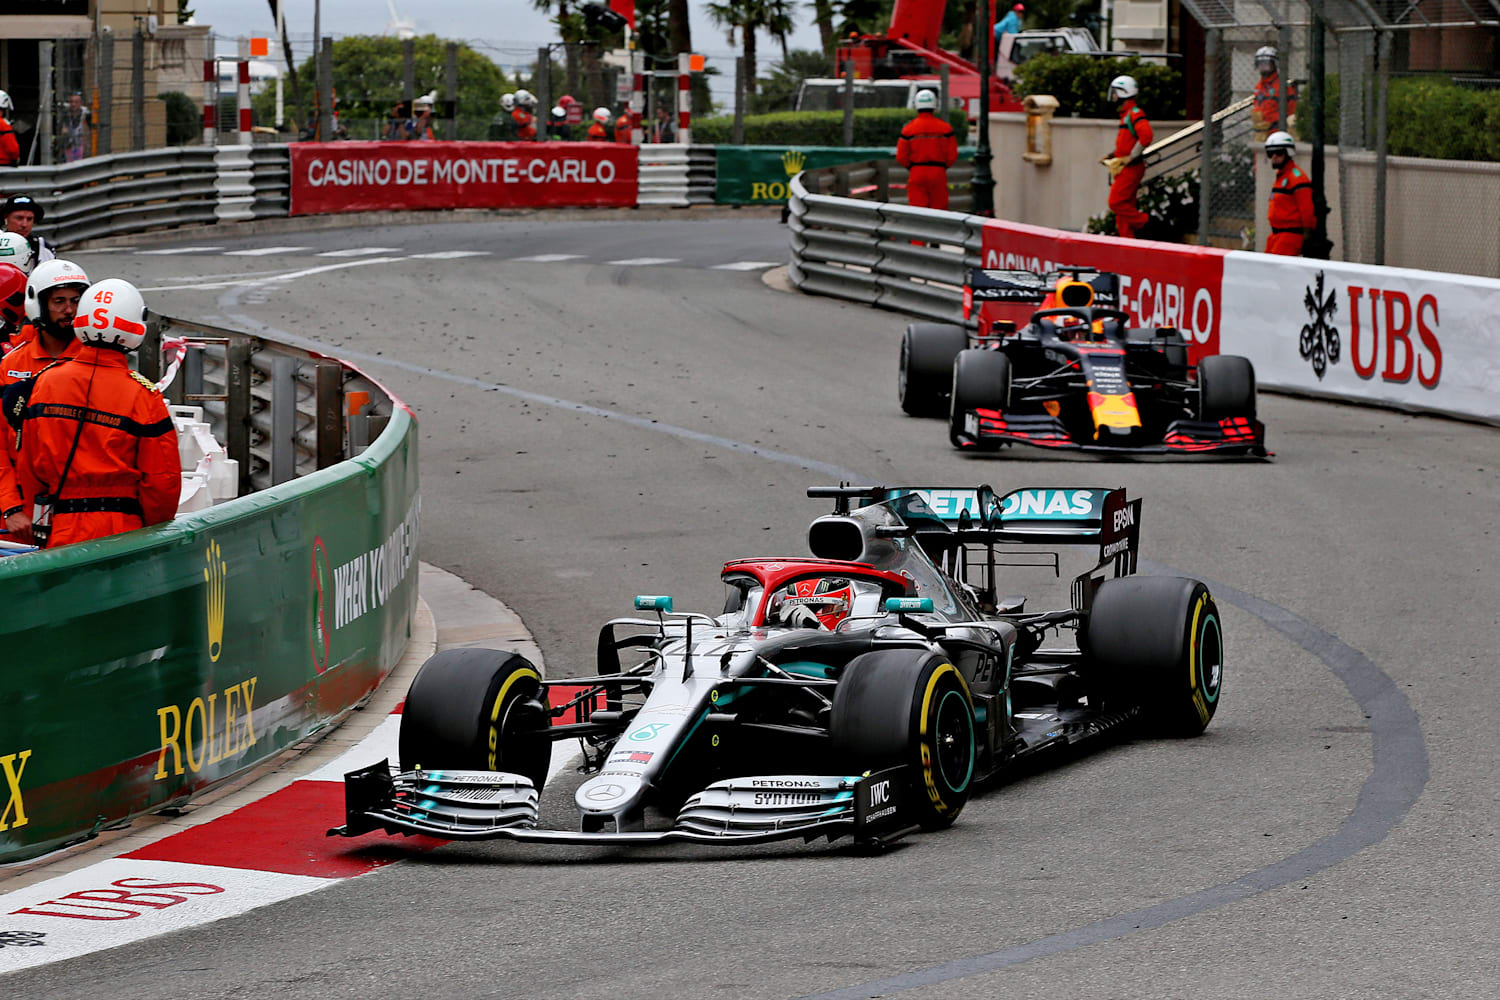 Monaco GP: Race